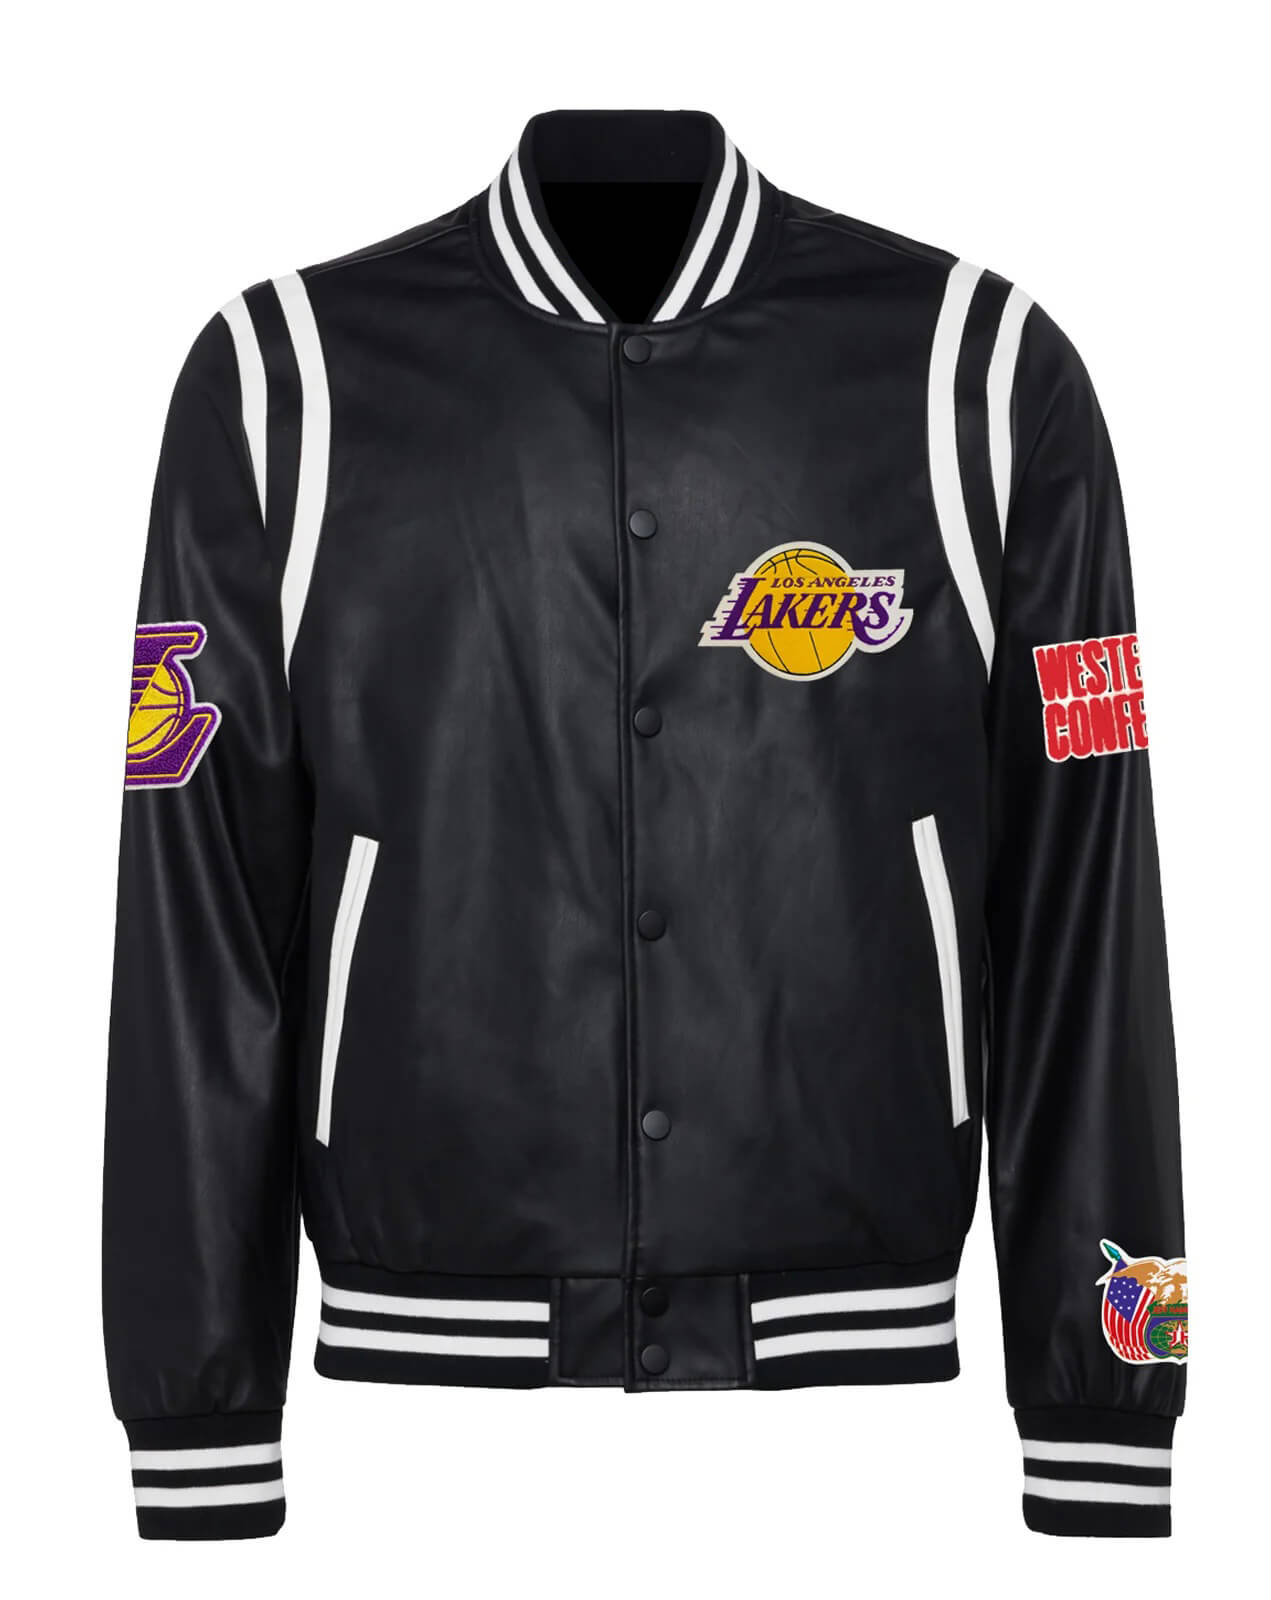 Nike Basketball NBA LA Lakers unisex jacket in black and white